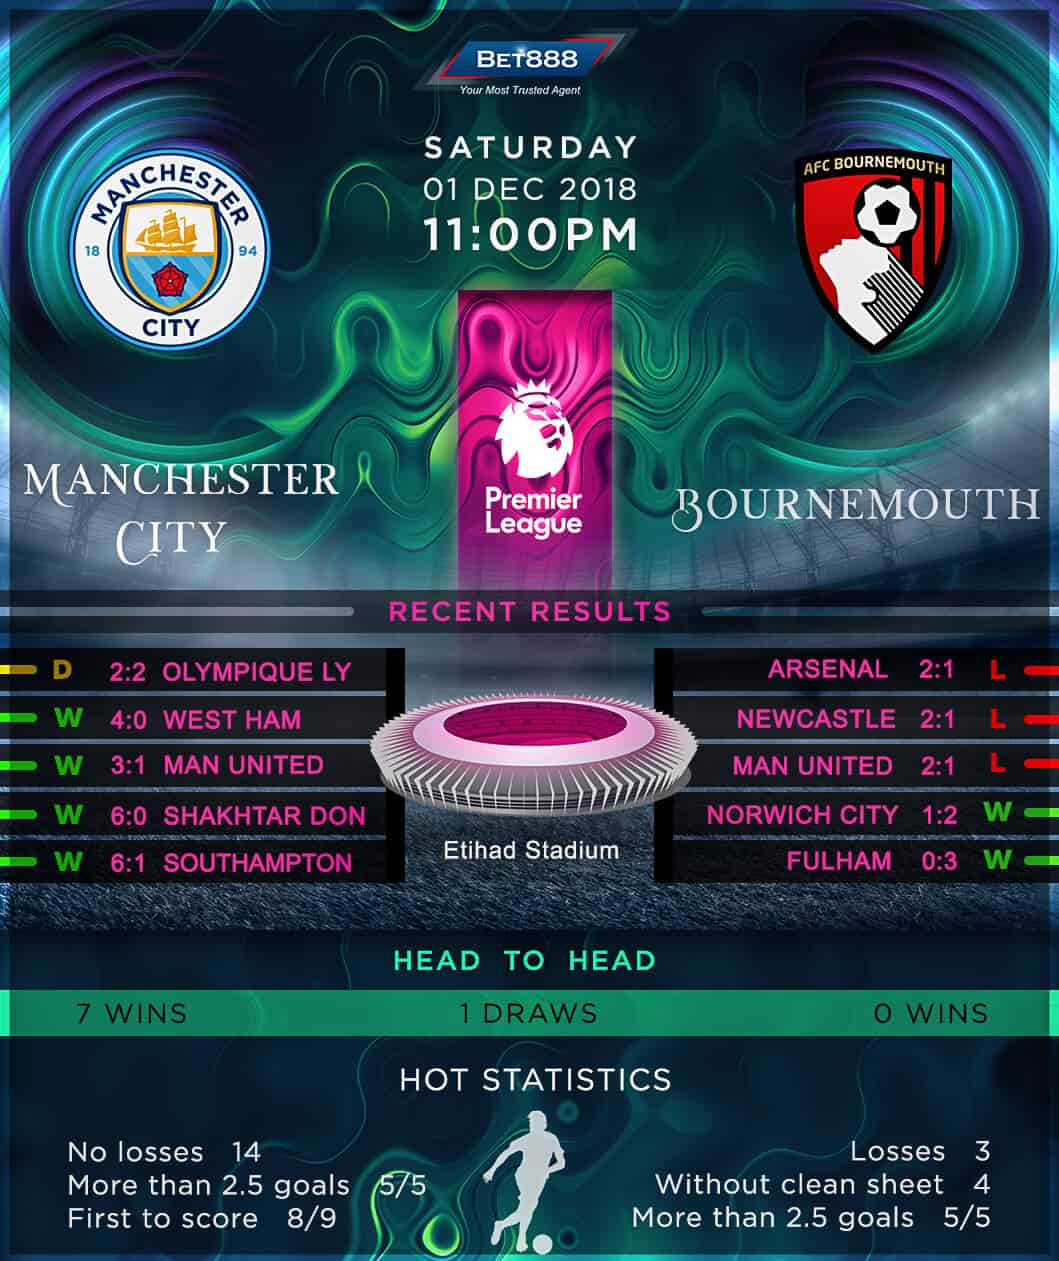 Manchester City vs Bournemouth 01/12/18